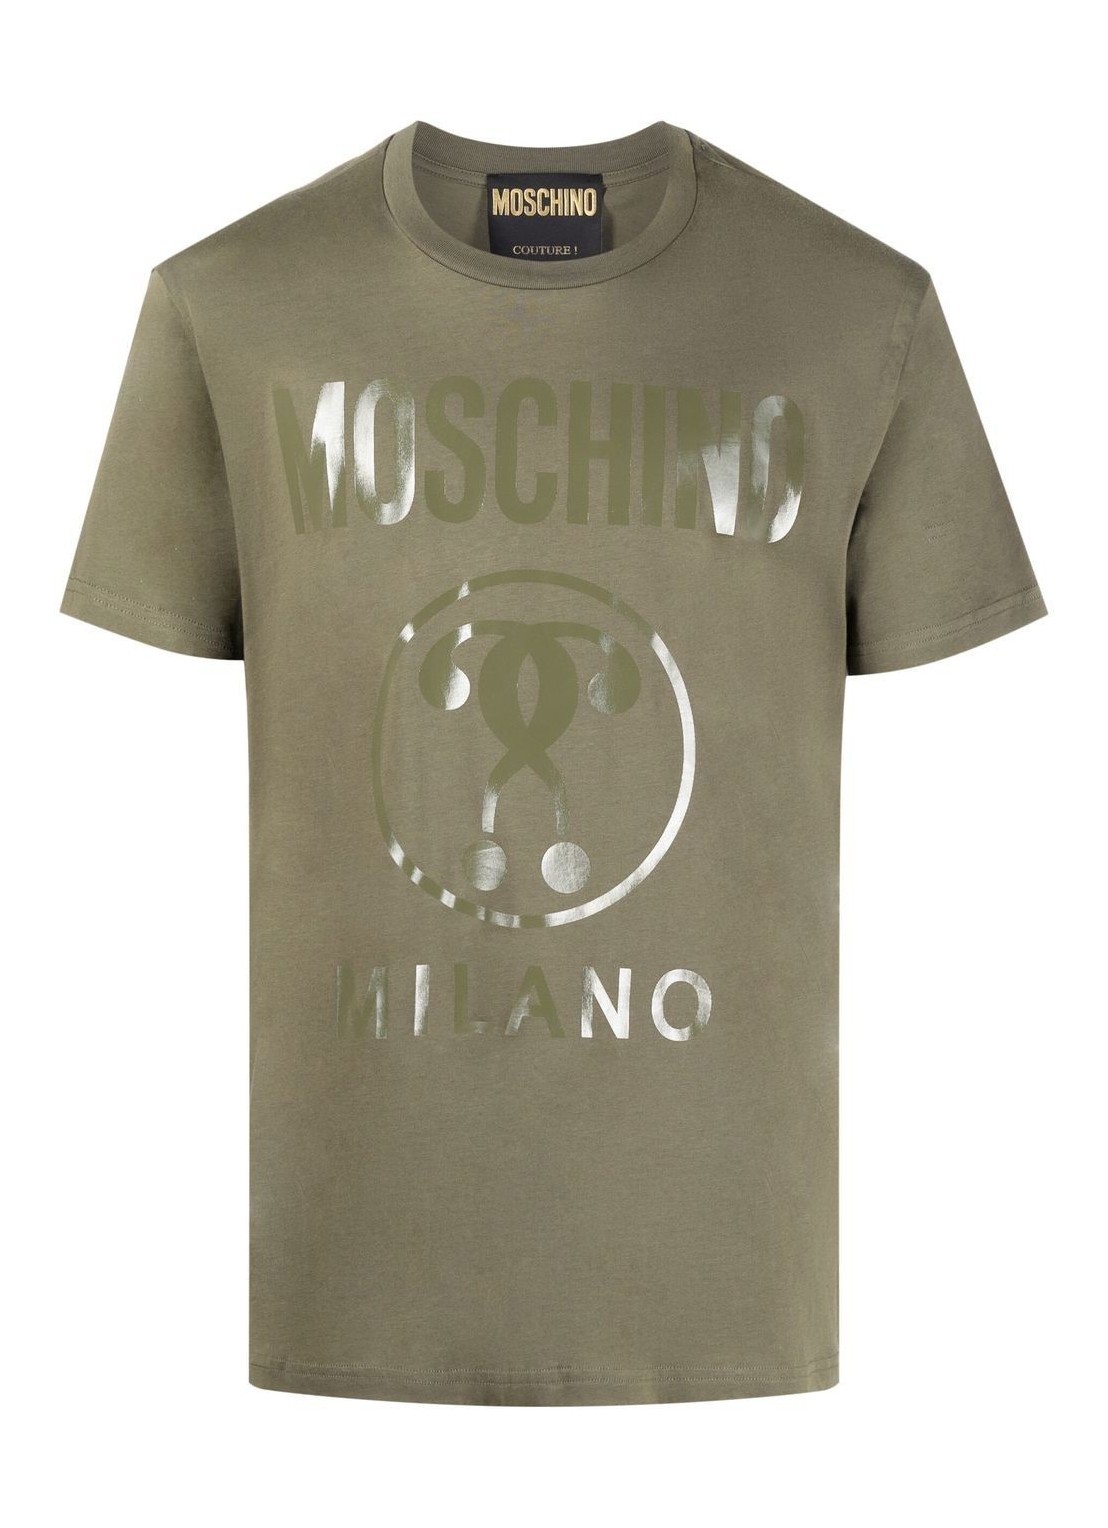 Camiseta moschino couture t-shirt man organic cotton jersey 07037041 a0427 talla verde
 